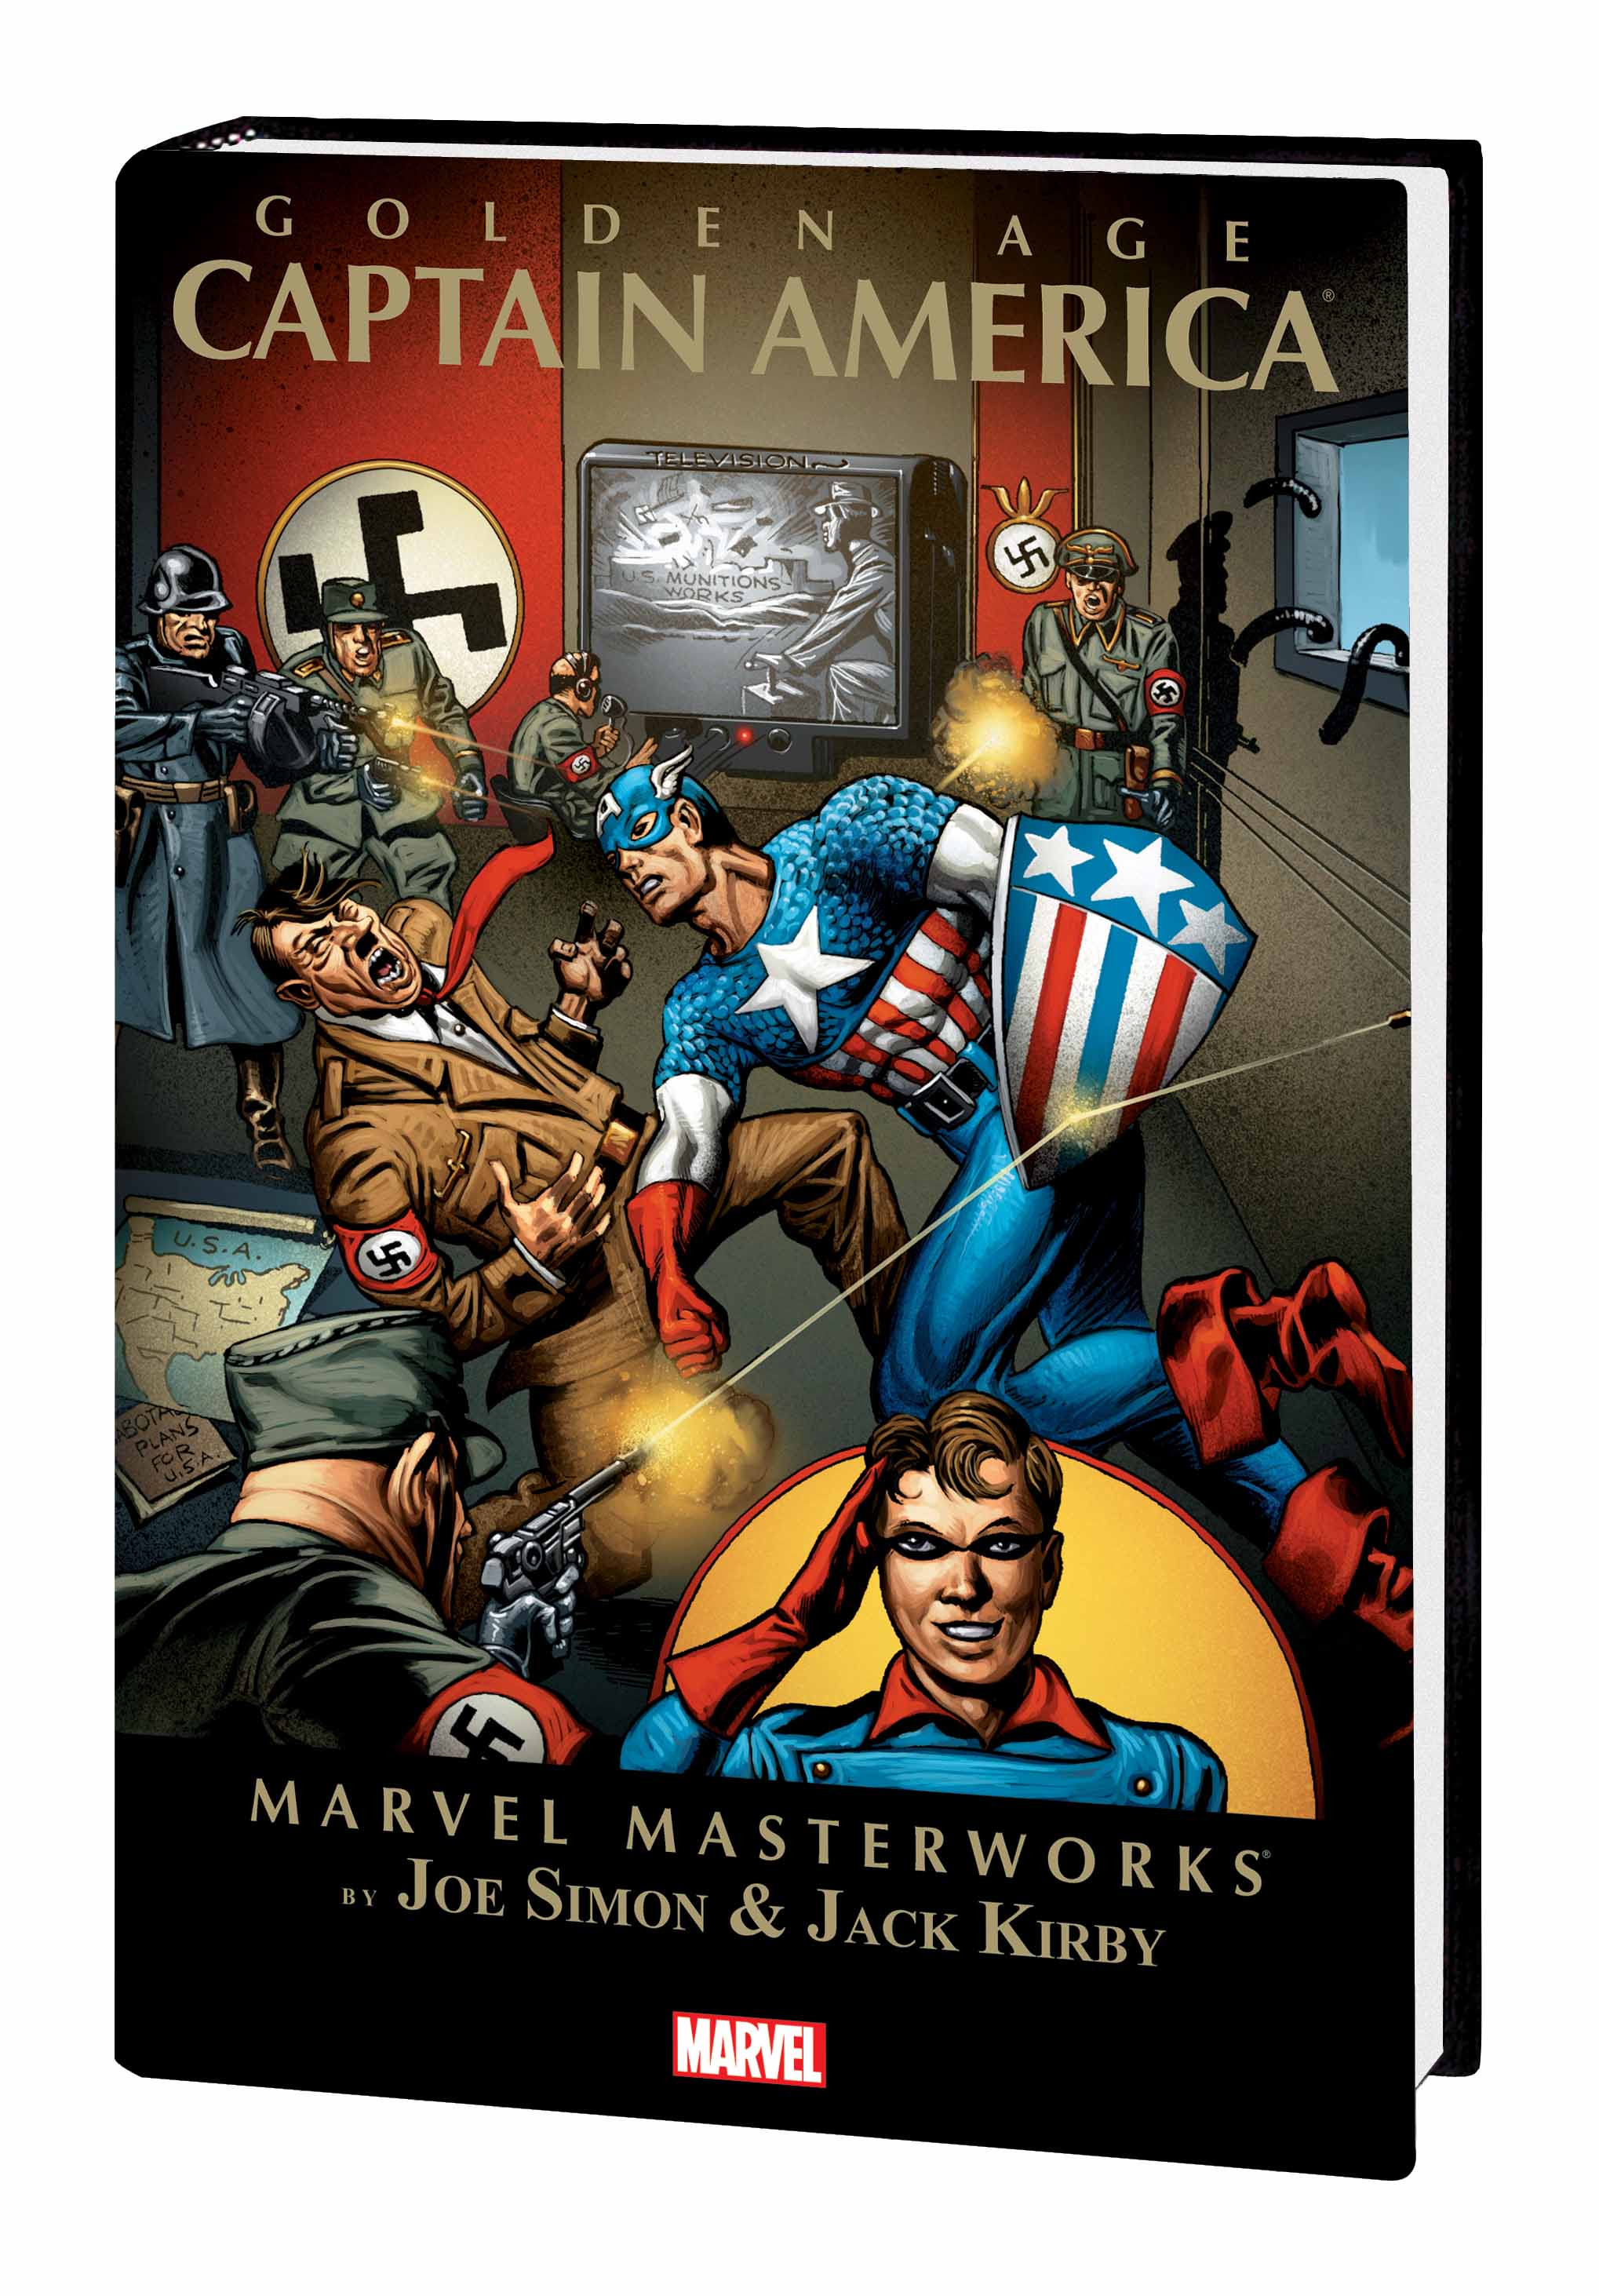 Marvel Masterworks: Golden Age Captain America Vol. 1 (Trade